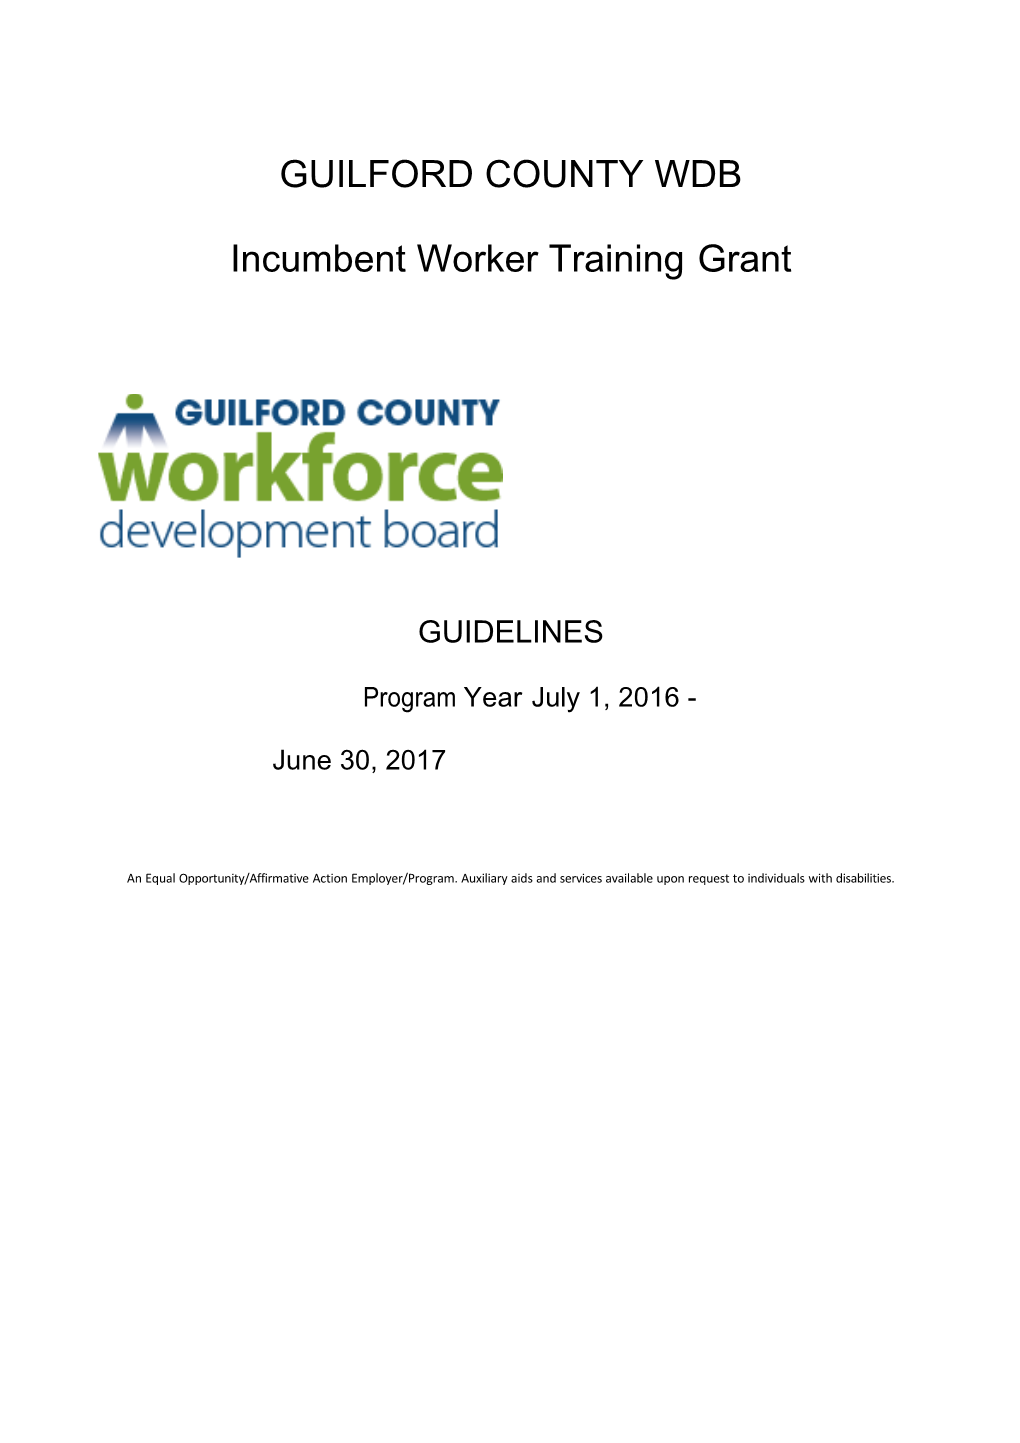 Incumbent Worker Training Grant